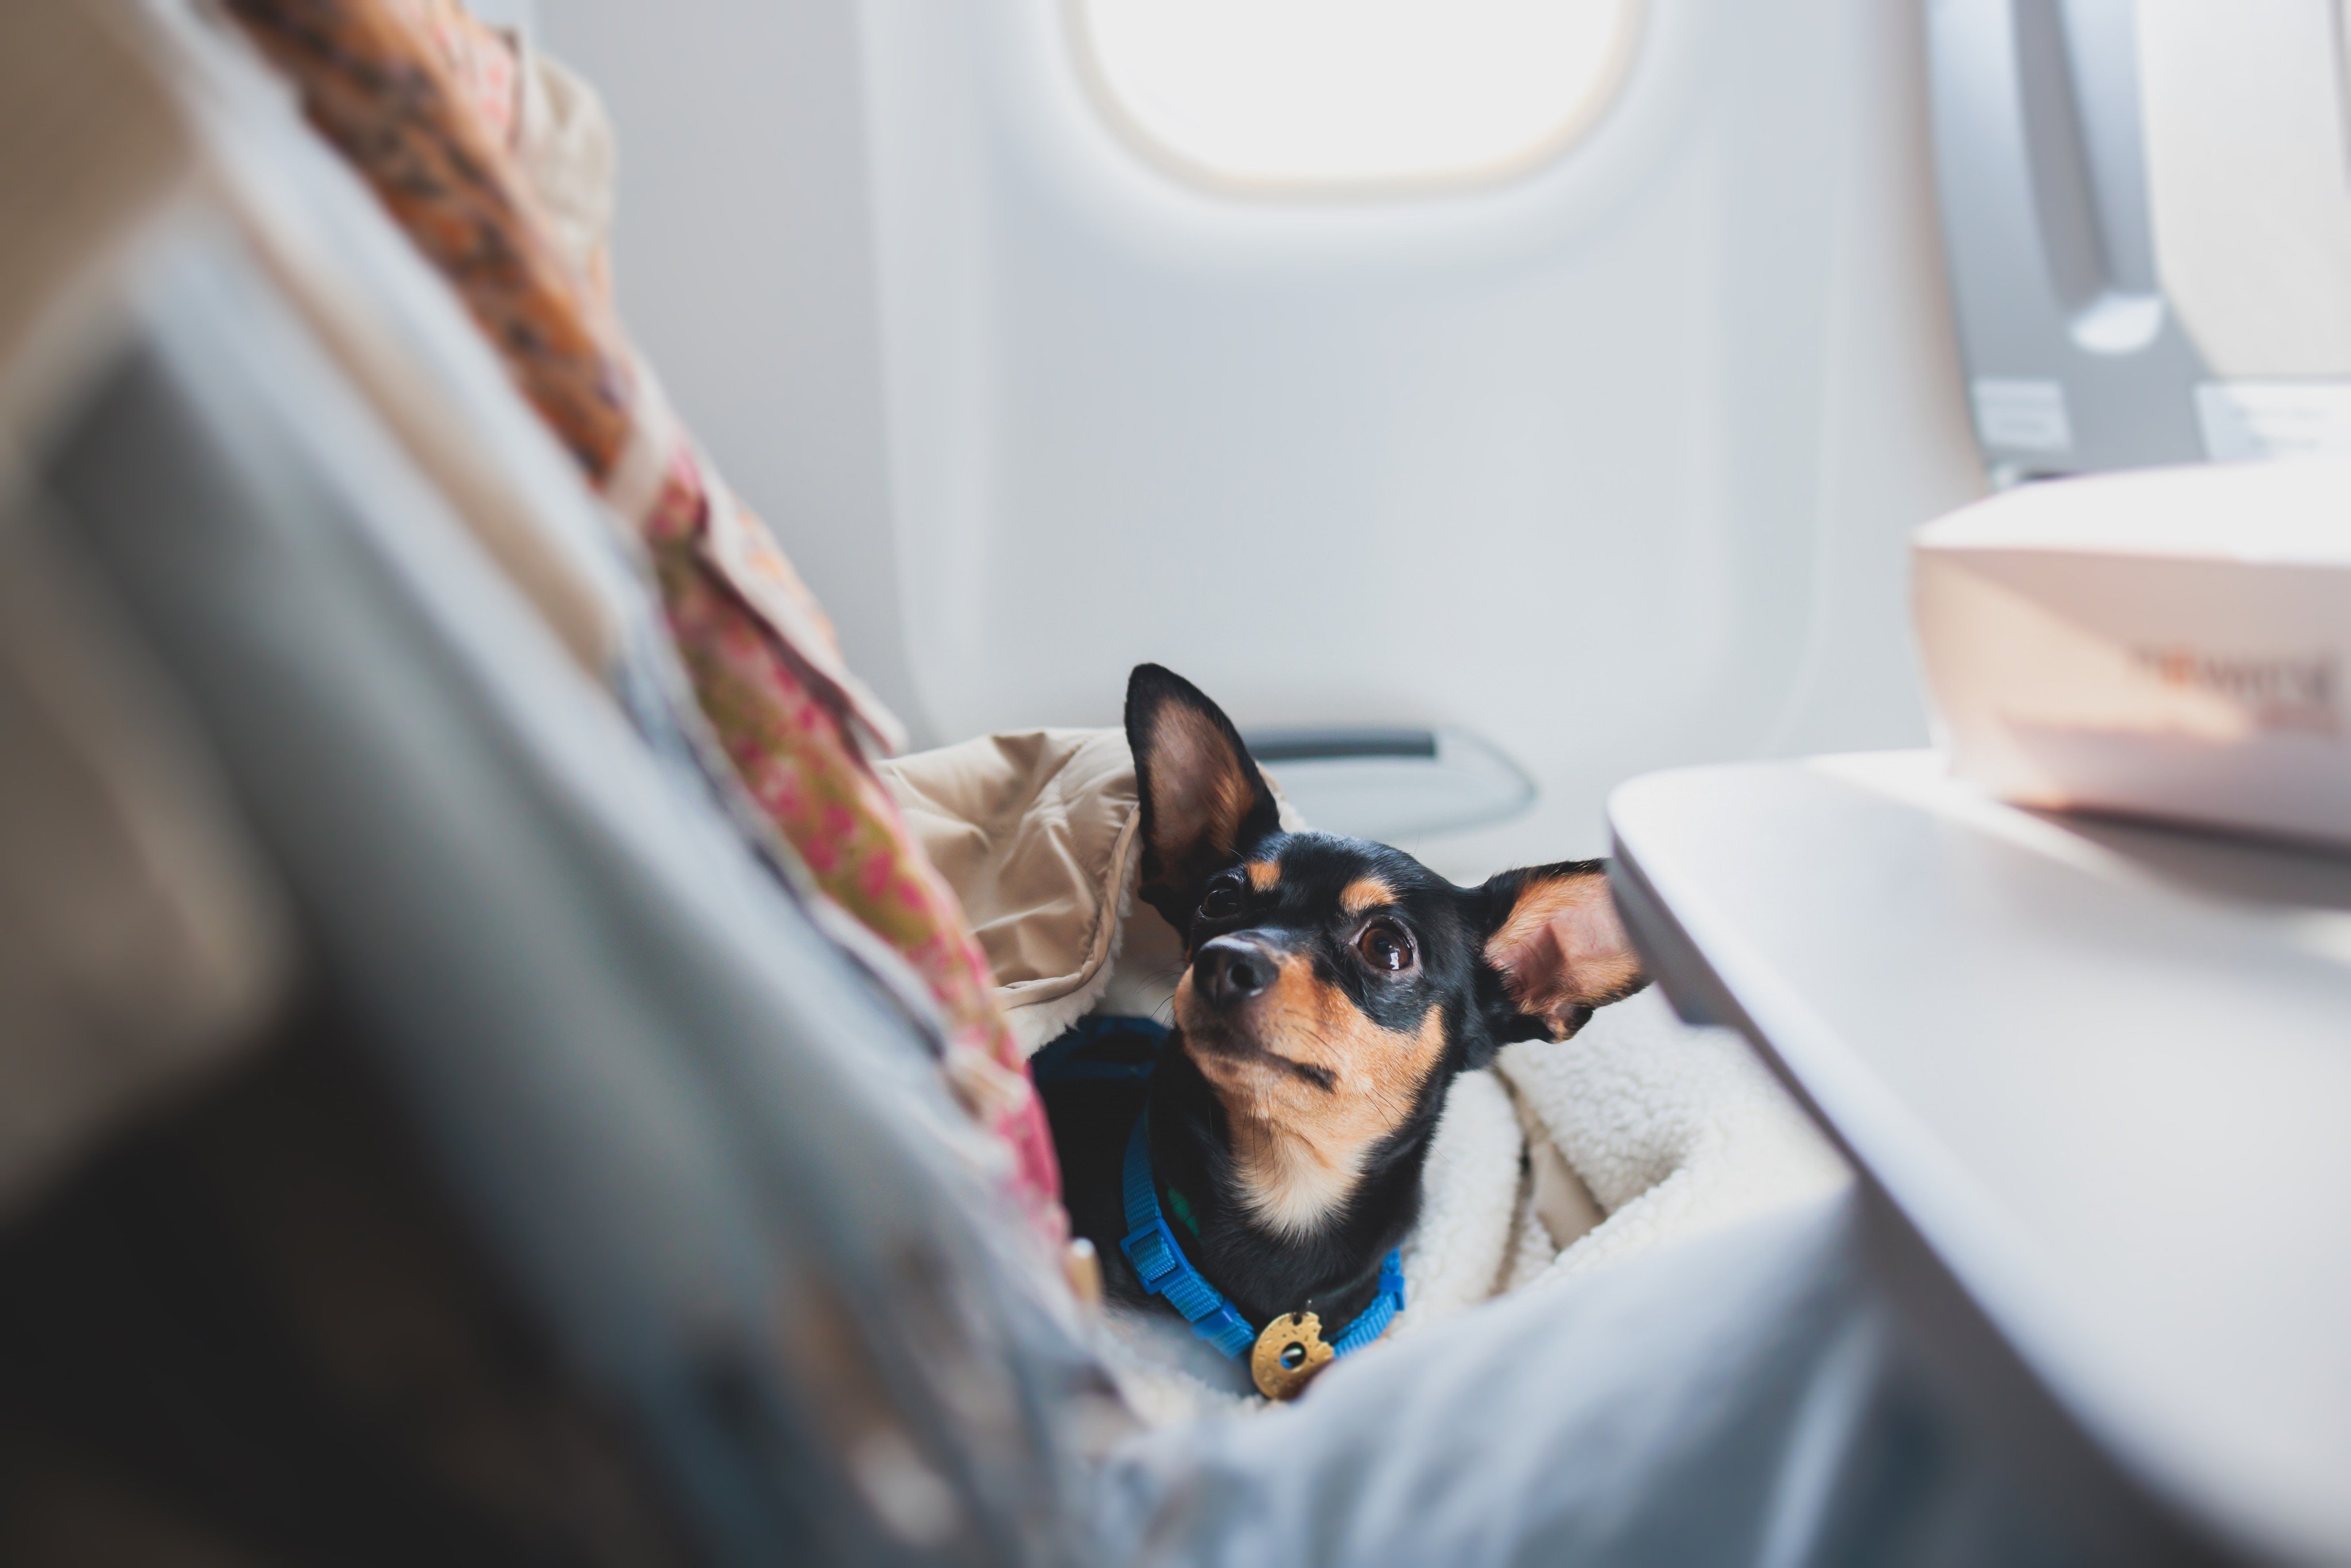 A dog in an aircraft cabin. Photo: Shutterstock